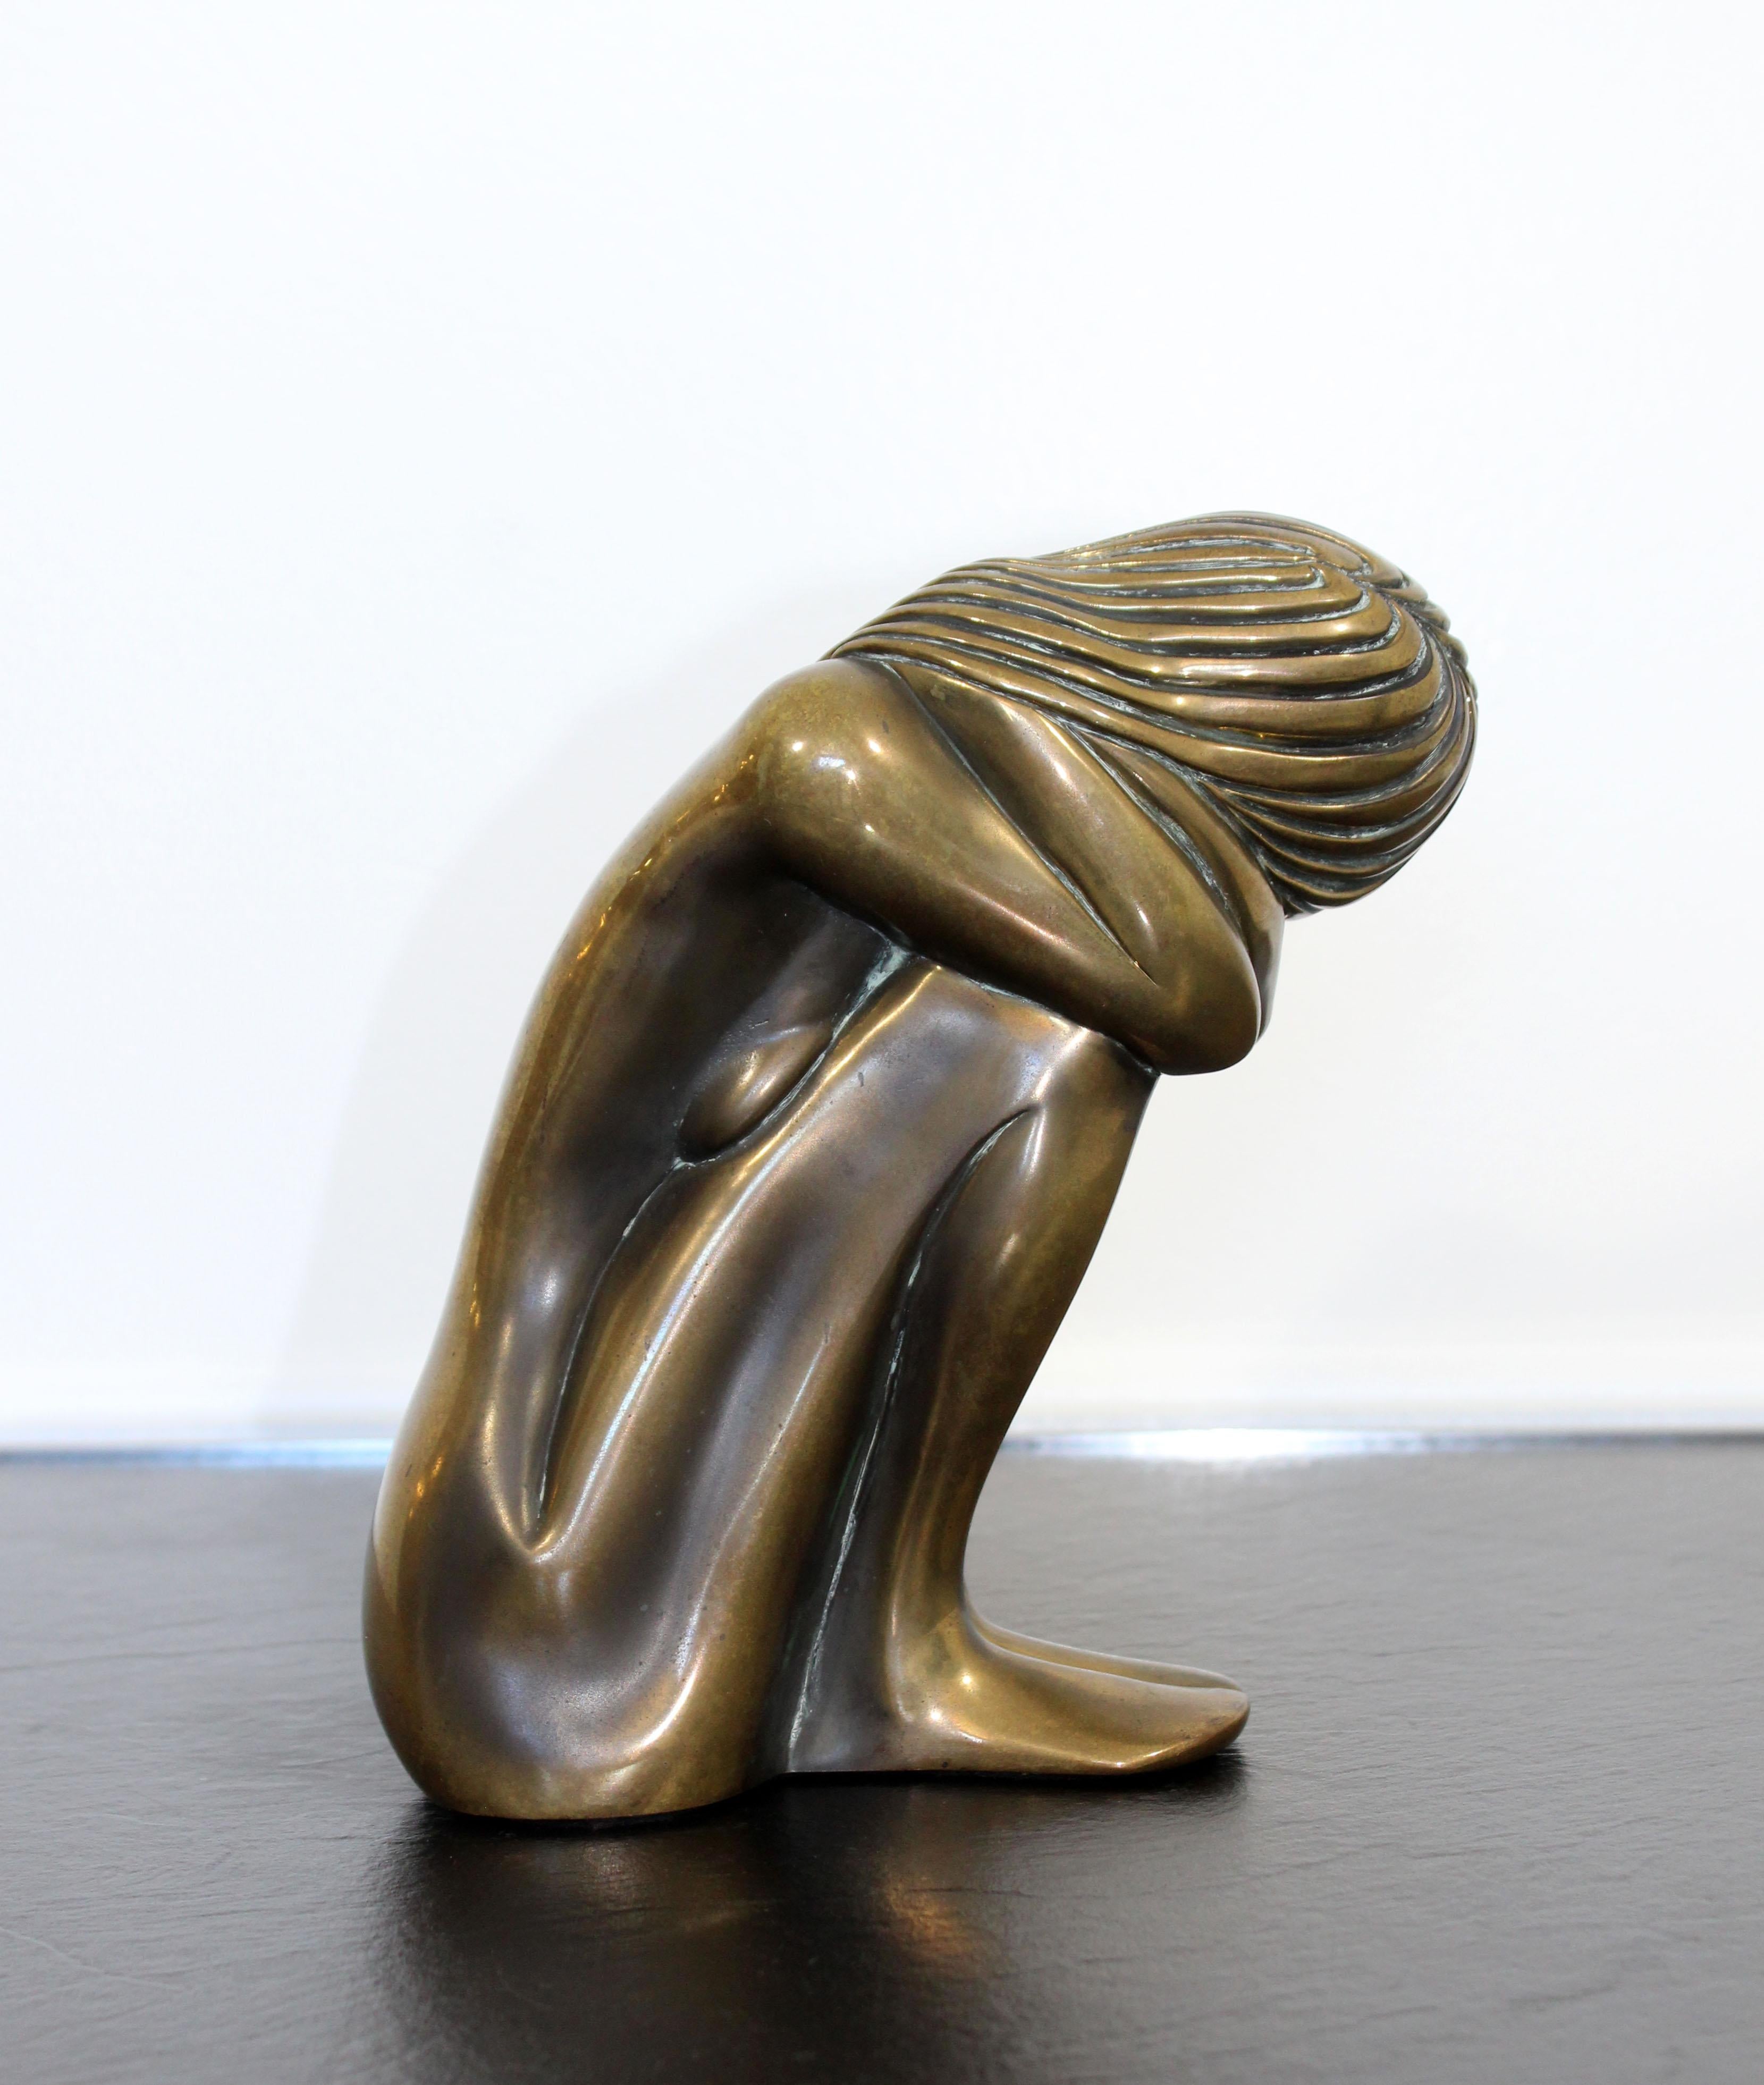 American Contemporary Modern Tom Bennett Signed Bronze Table Sculpture 94/250 Solitude